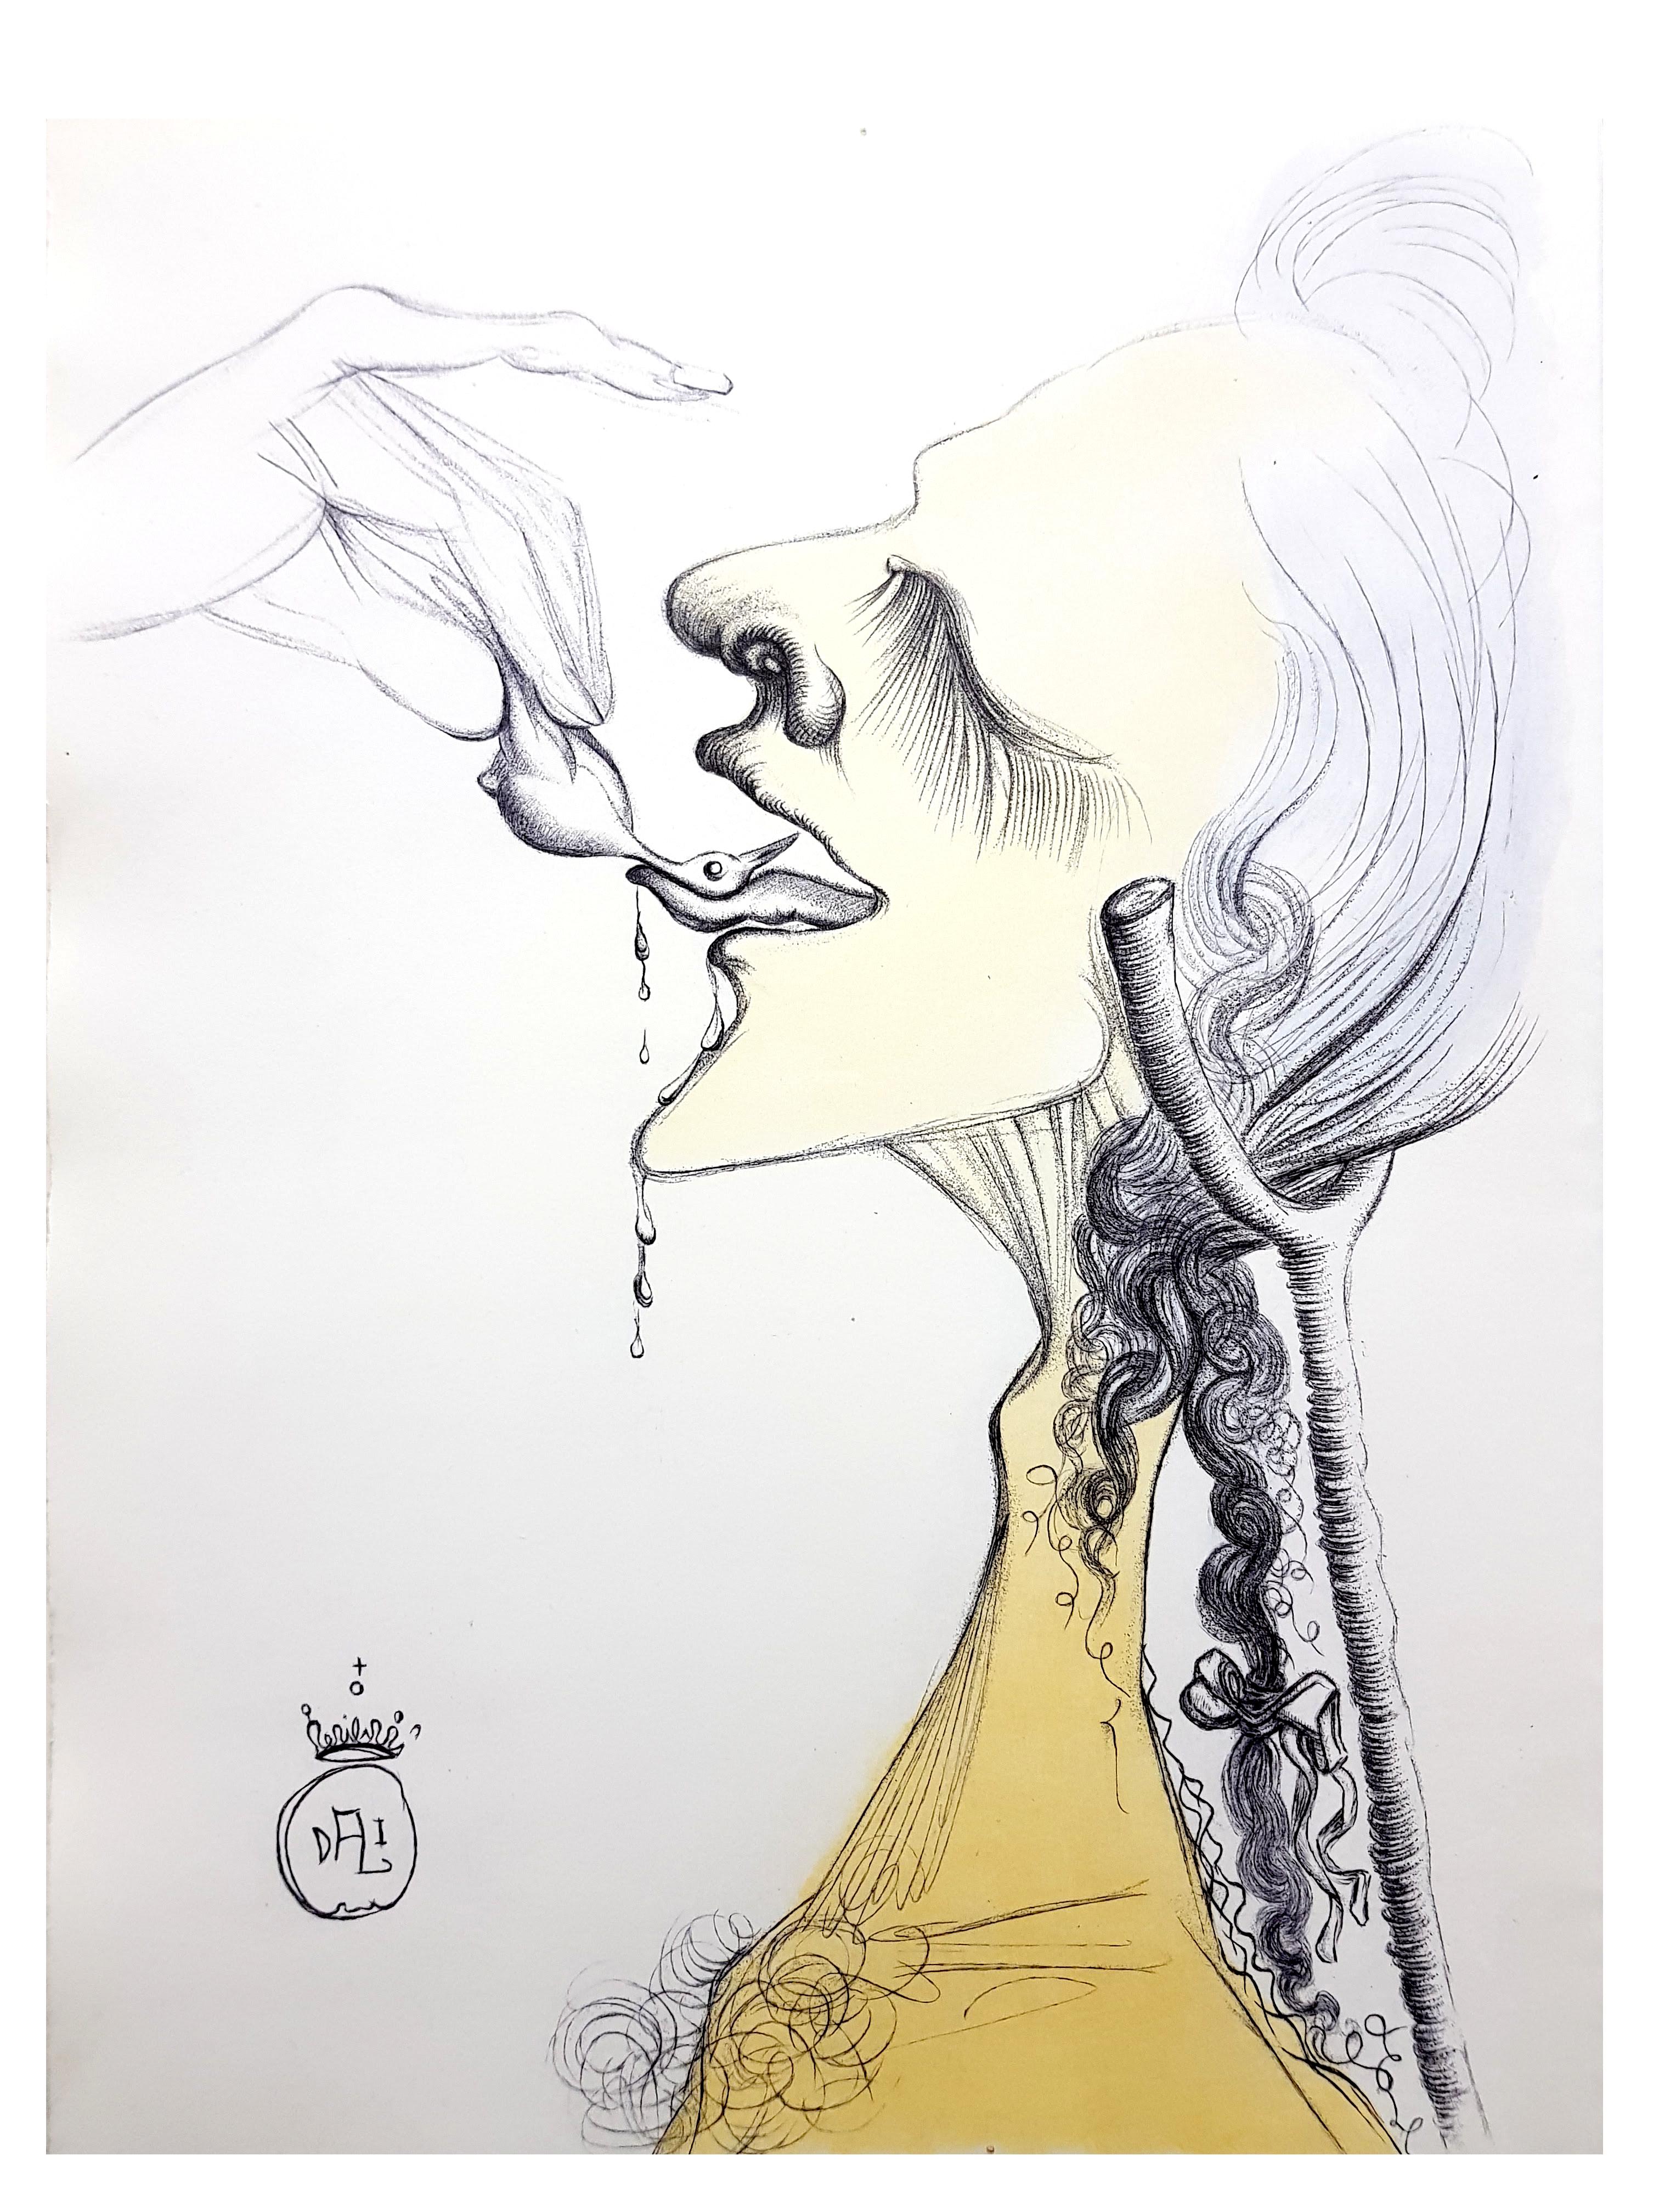 Salvador Dali - Bird on Tongue - Original Etching - Surrealist Print by Salvador Dalí